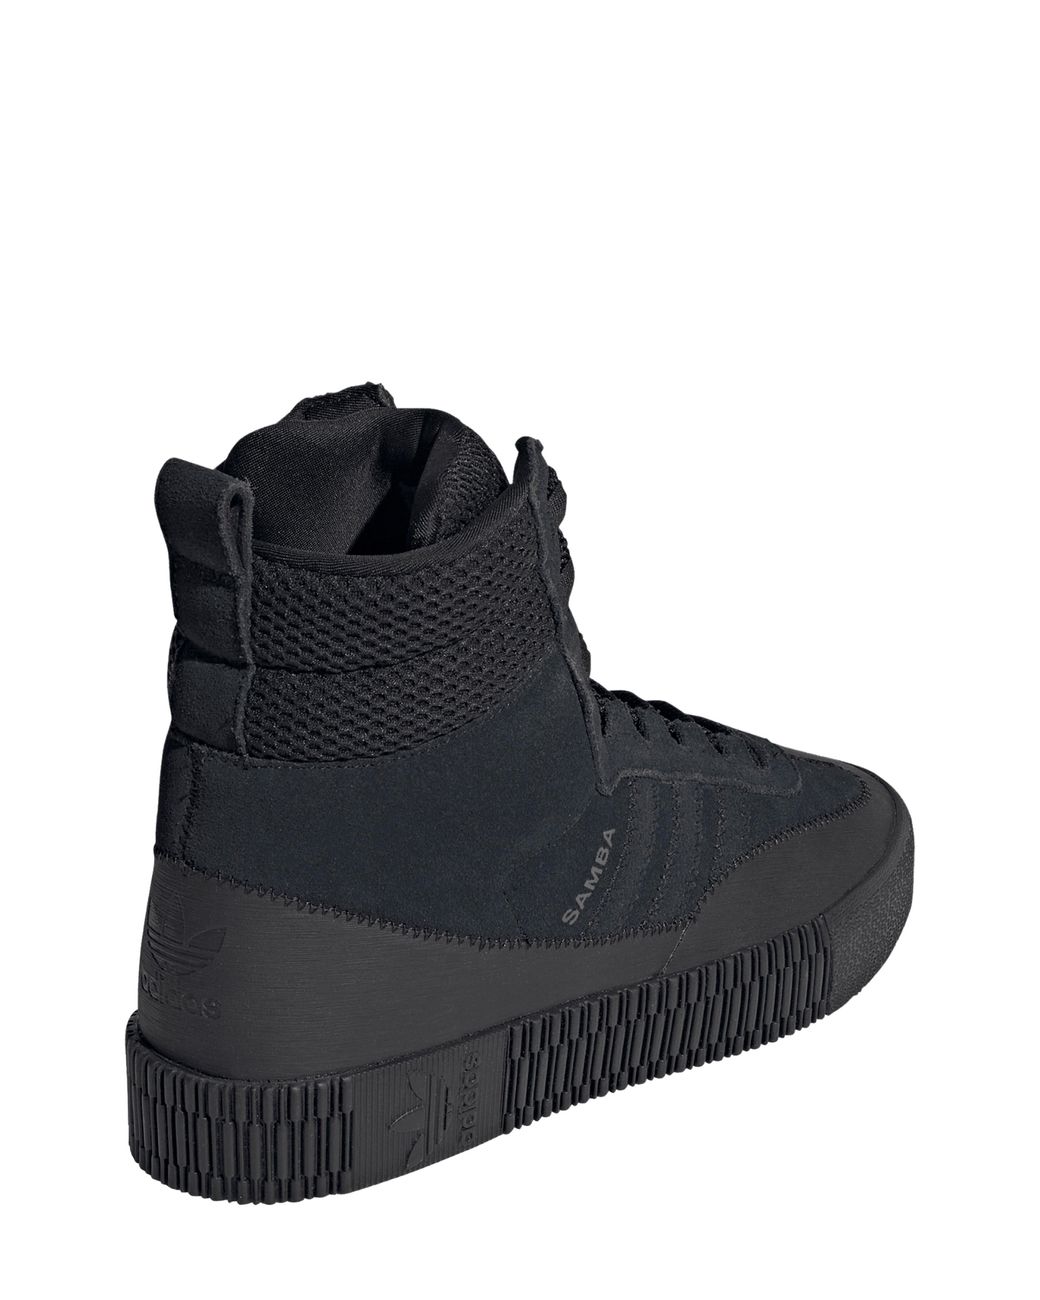 adidas Samba Boot in Black | Lyst